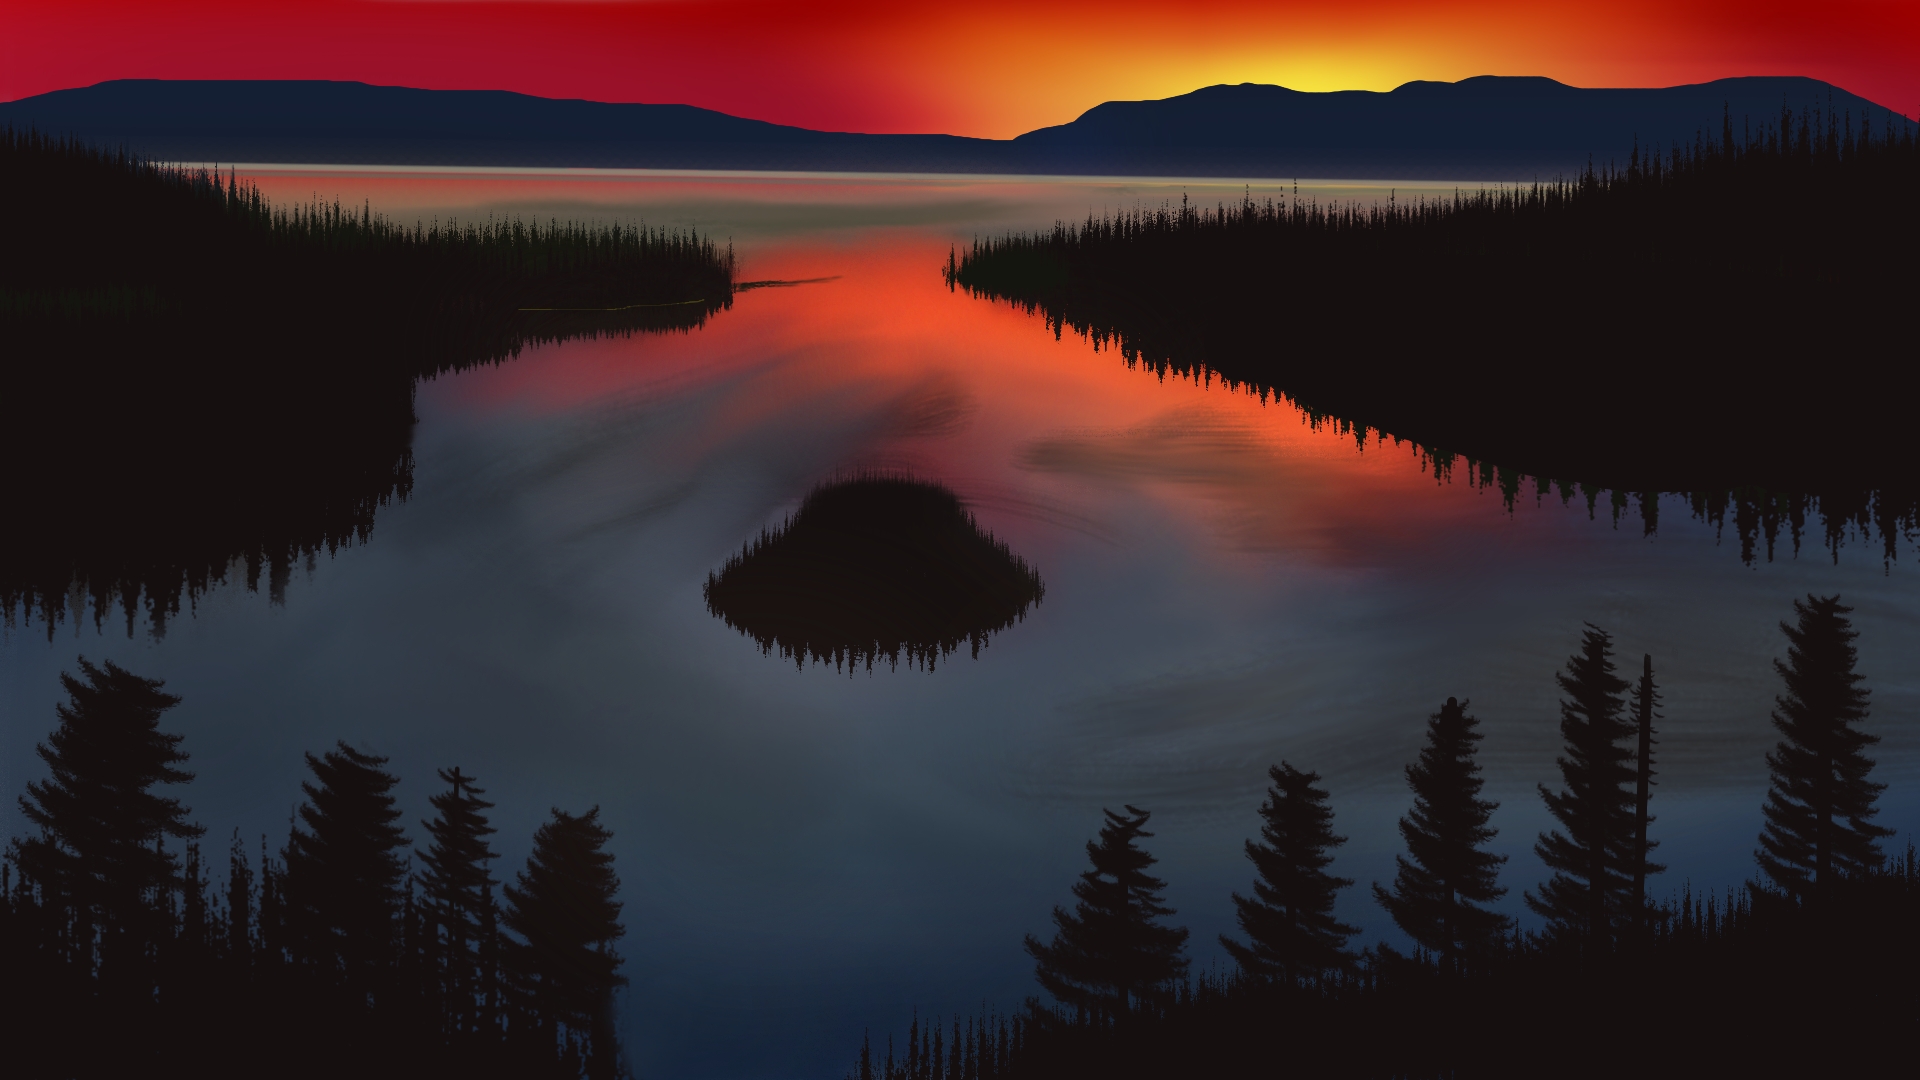 General 1920x1080 digital painting nature landscape silhouette sunset